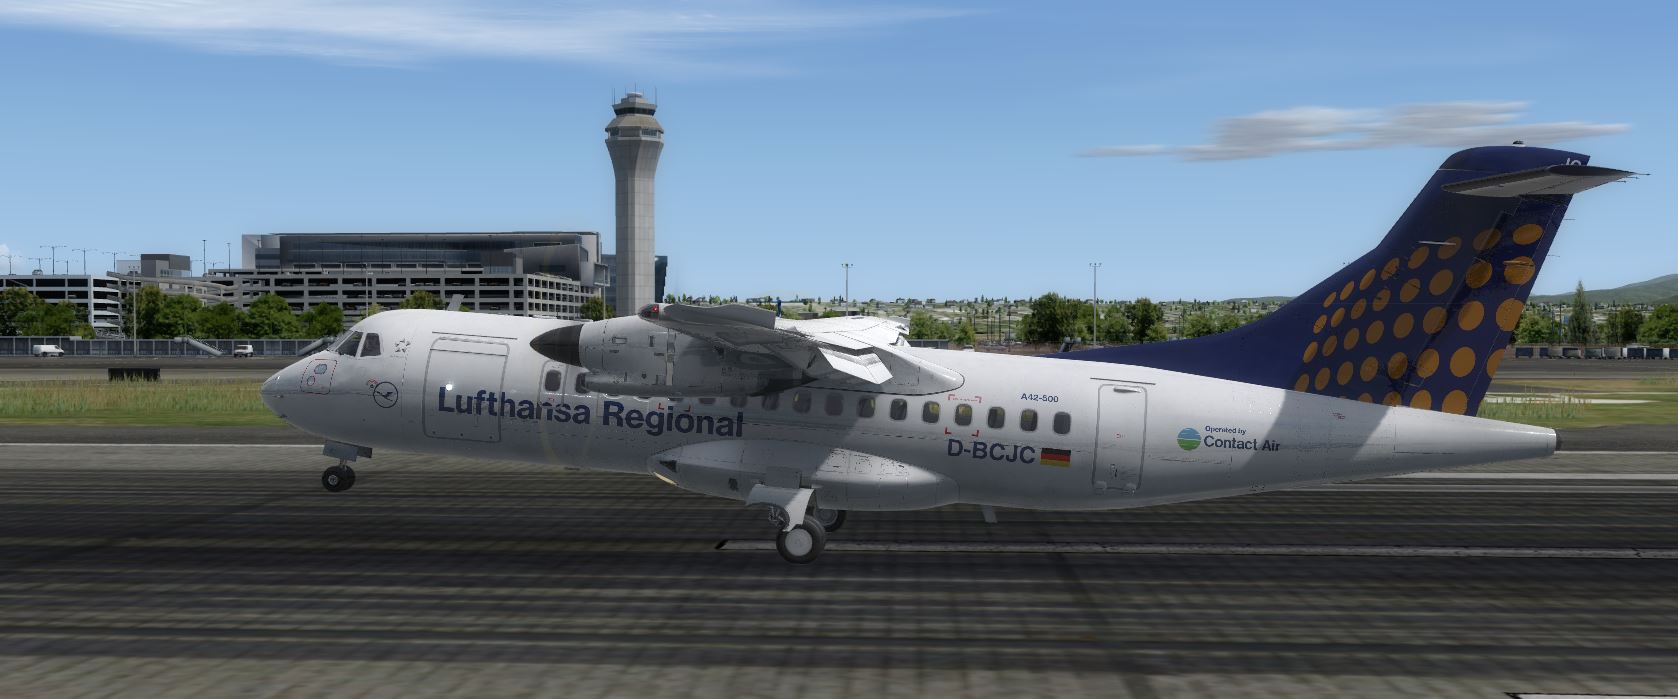 ATR42-500 Lufthansa-3072 